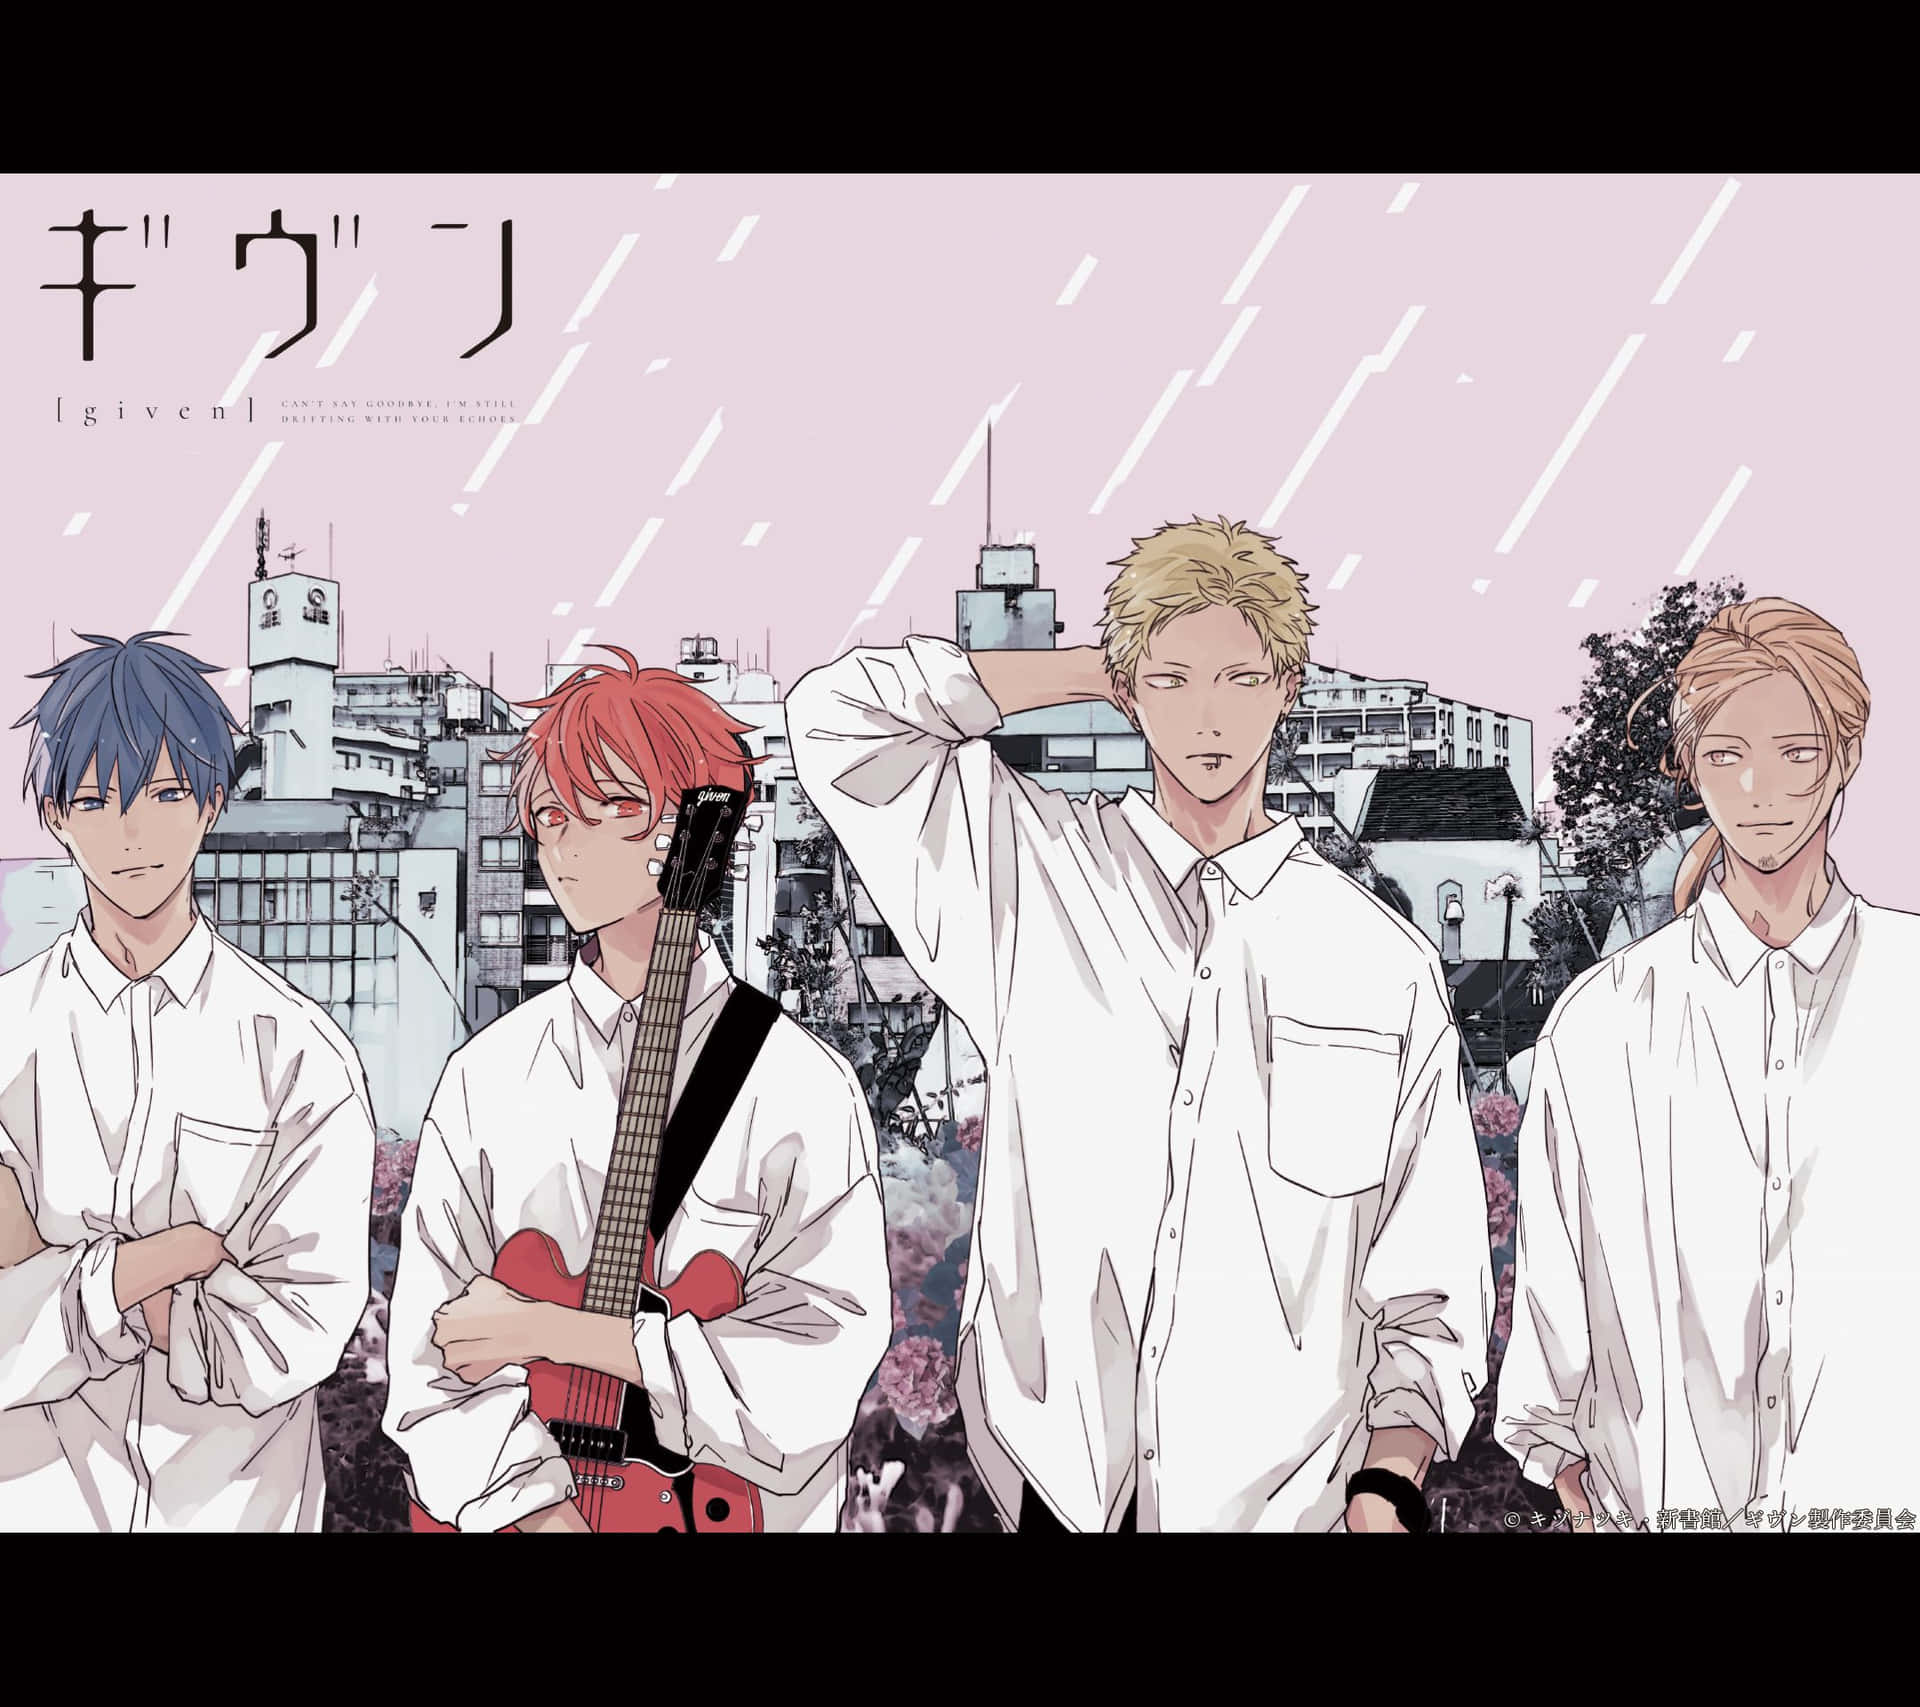 Boy Band From Natsuki Kizu's Given Anime Wallpaper